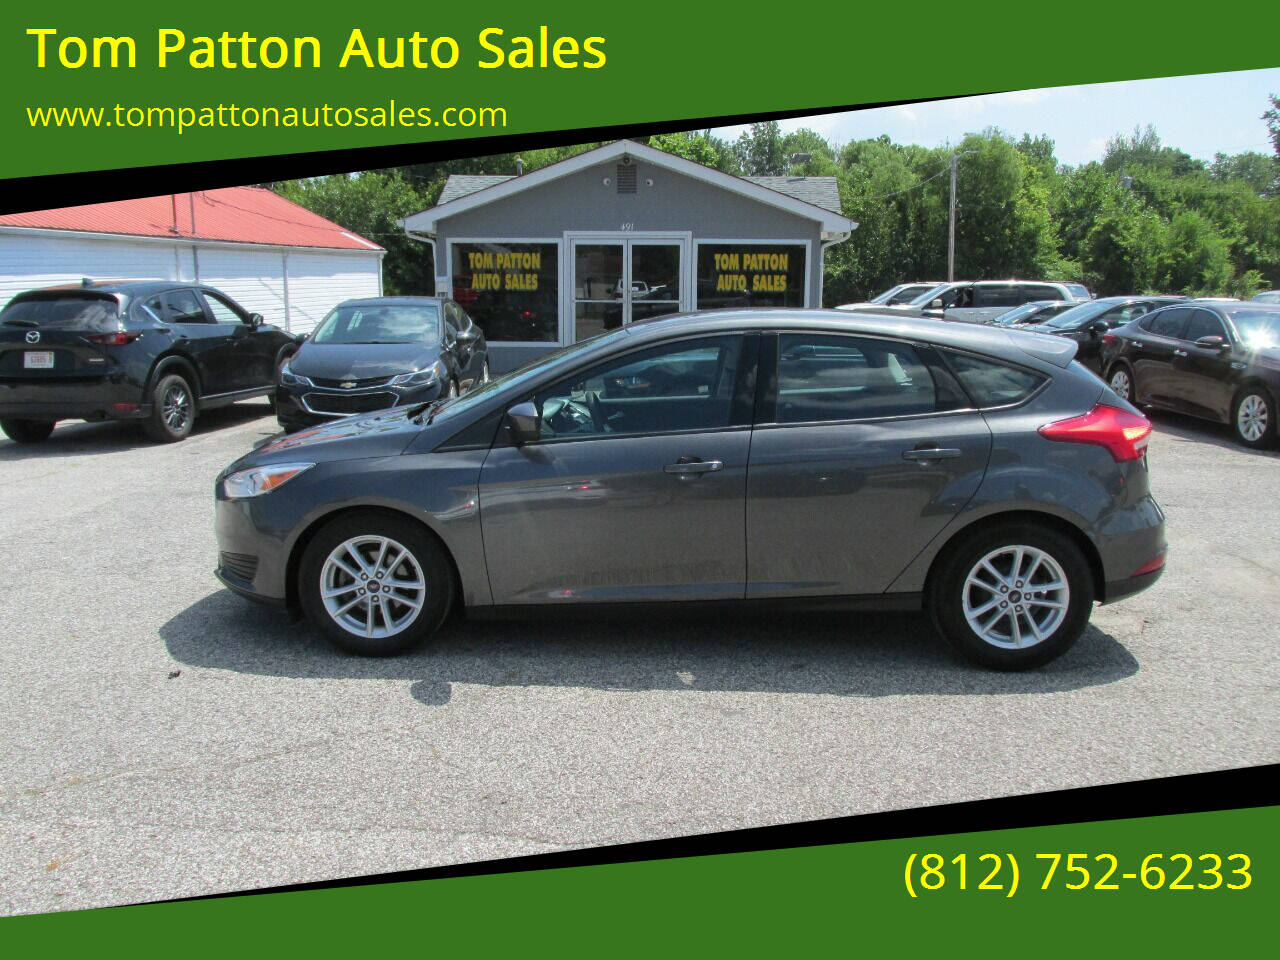 Tom Patton Auto Sales in Scottsburg, IN ®